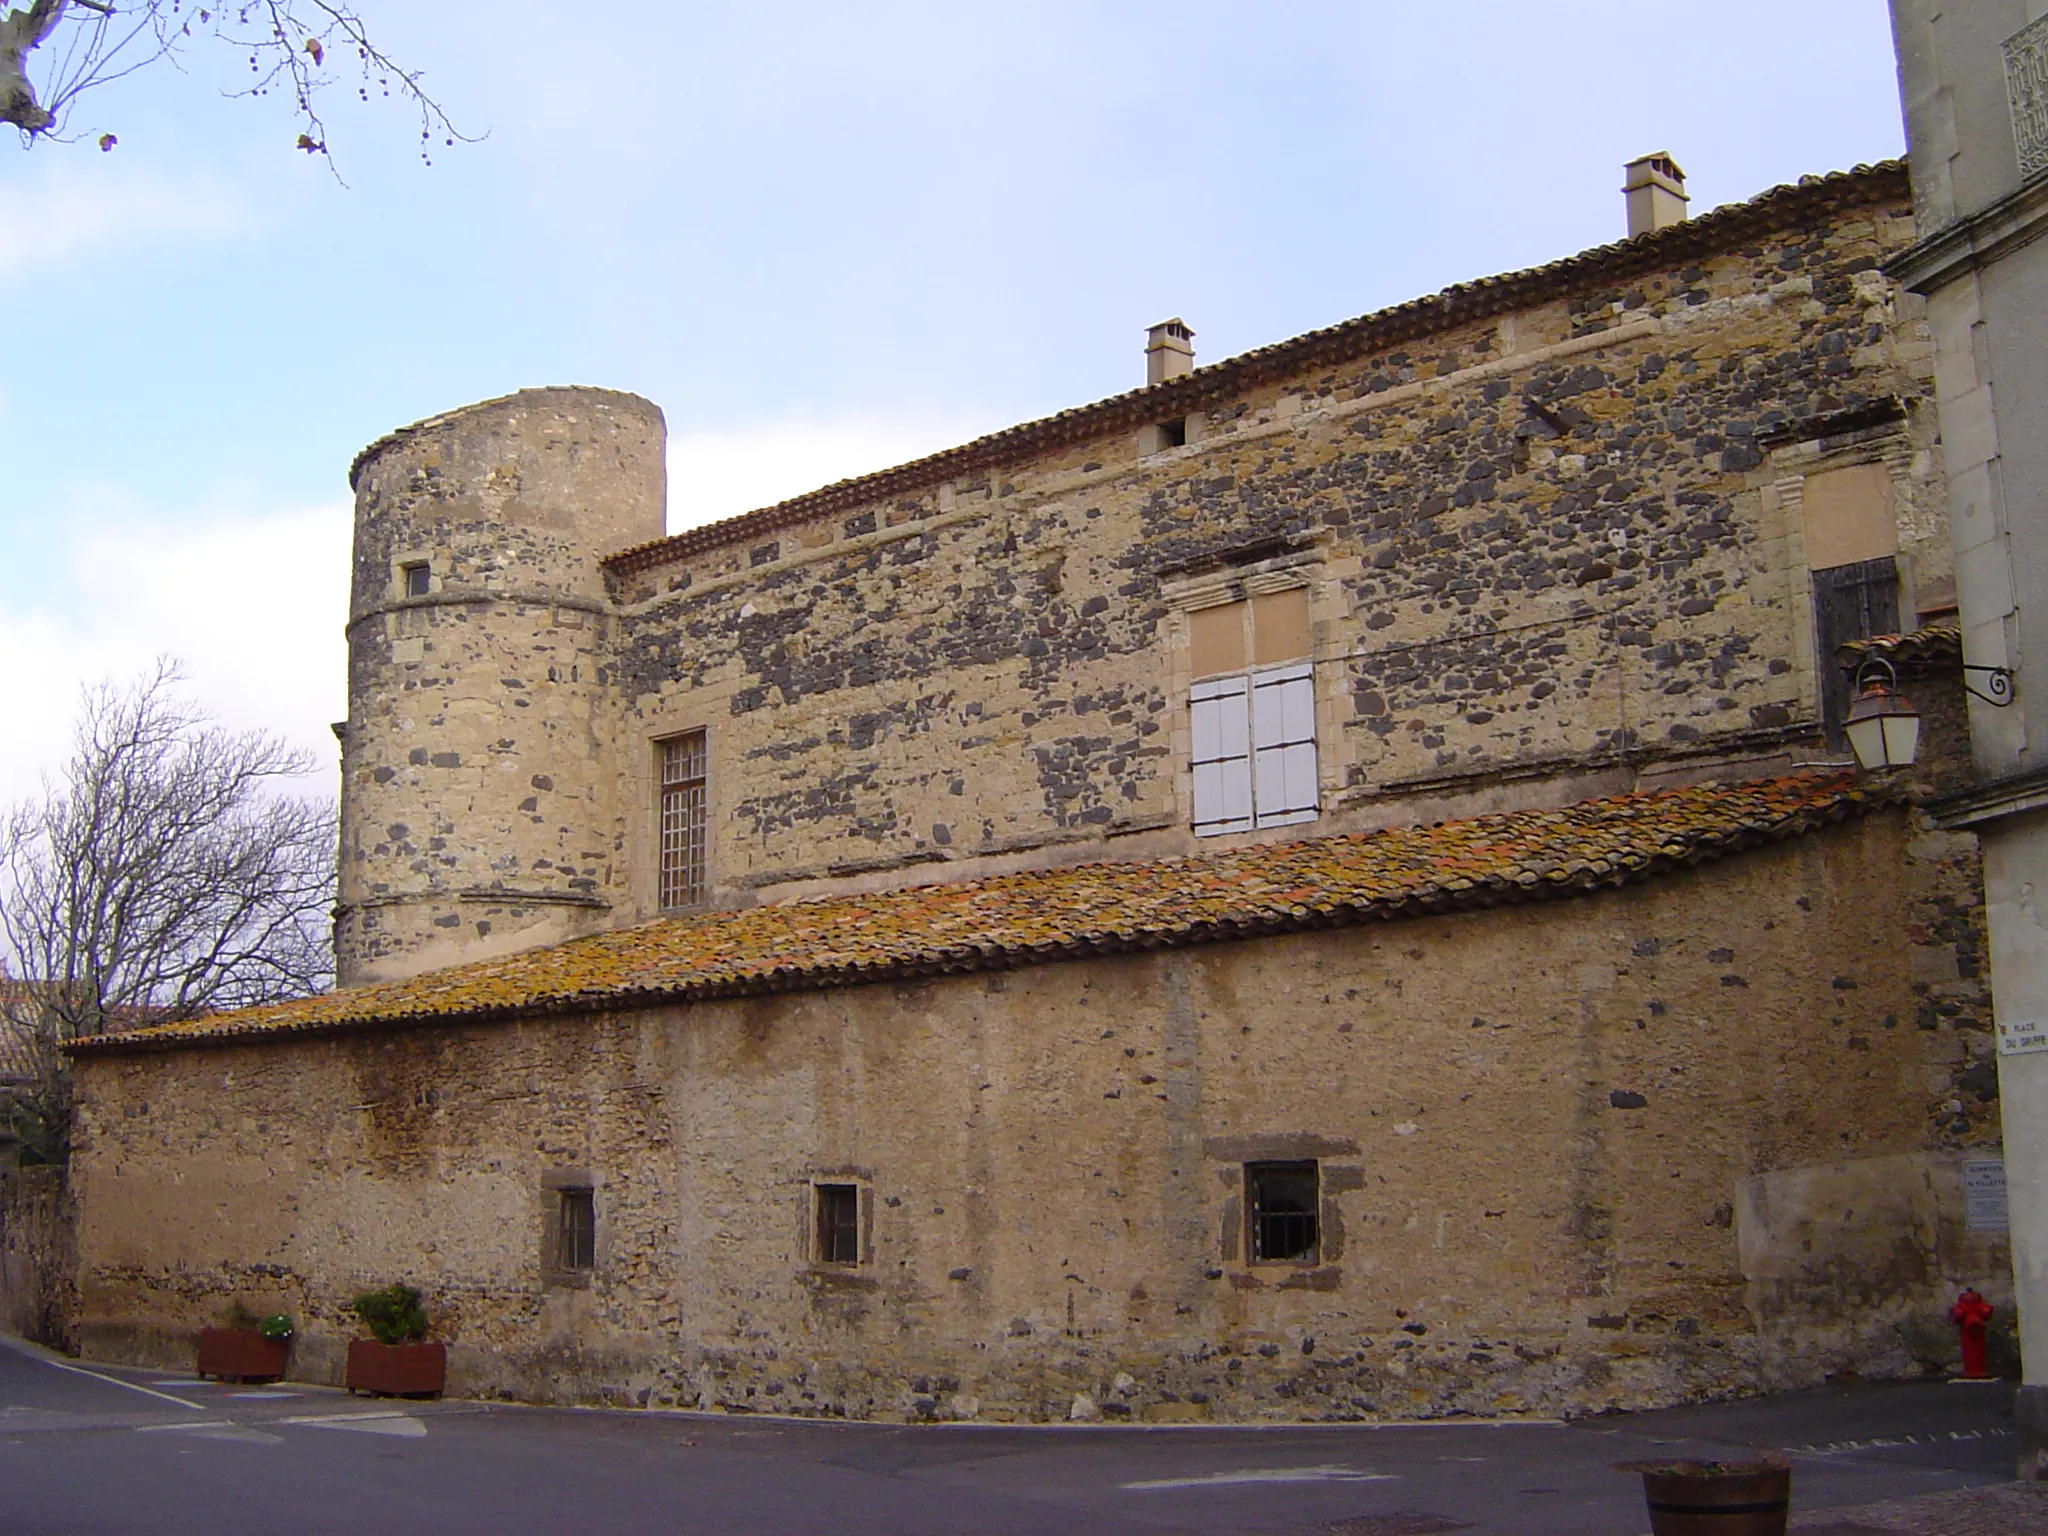 Photo showing: Old Castle, Village of Nizas, Hérault department, Languedoc, France.